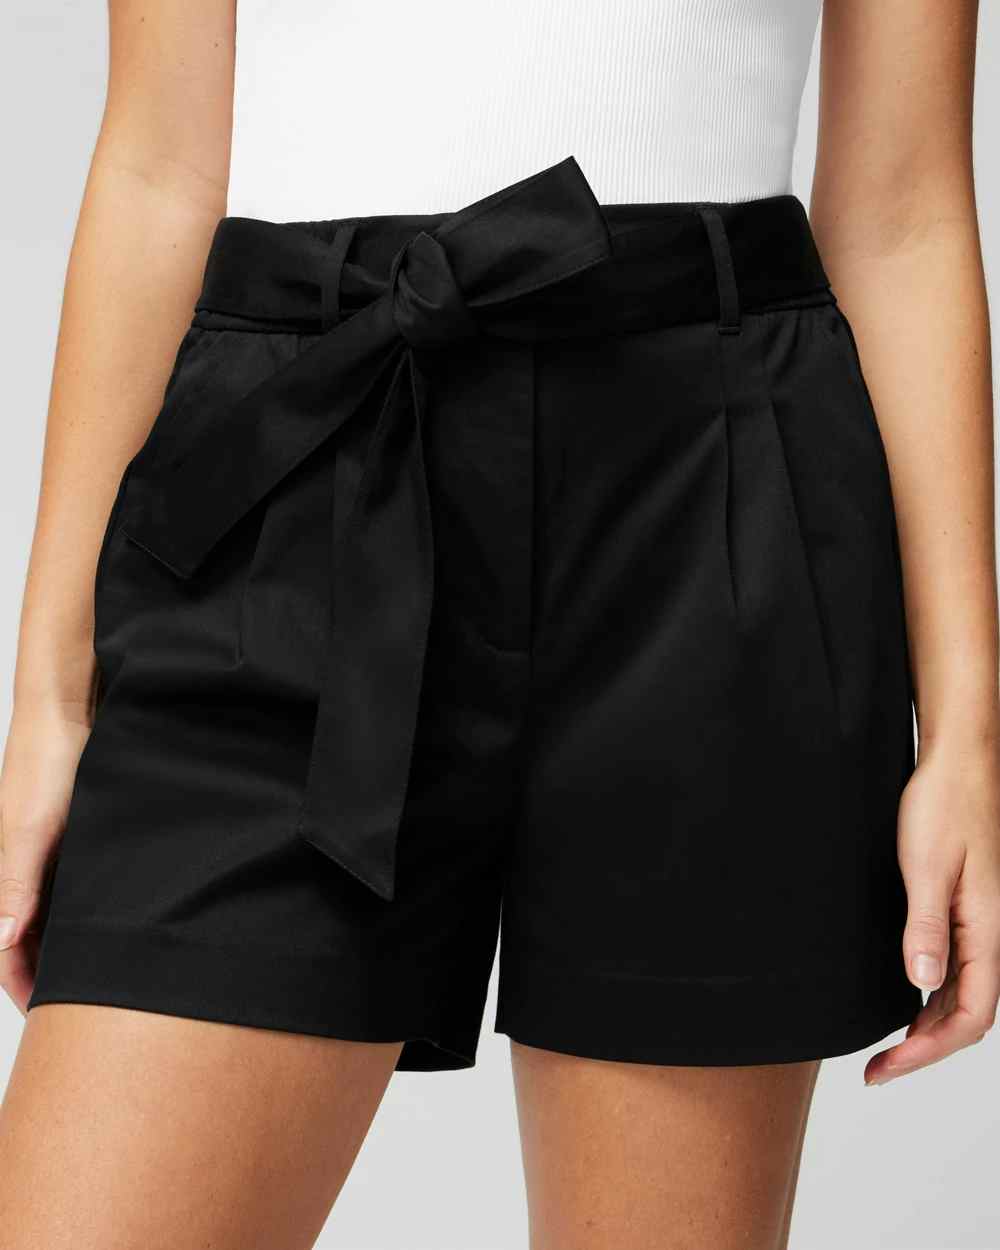 Shop Women's Shorts - High-Waisted, Denim & More | White House Black Market